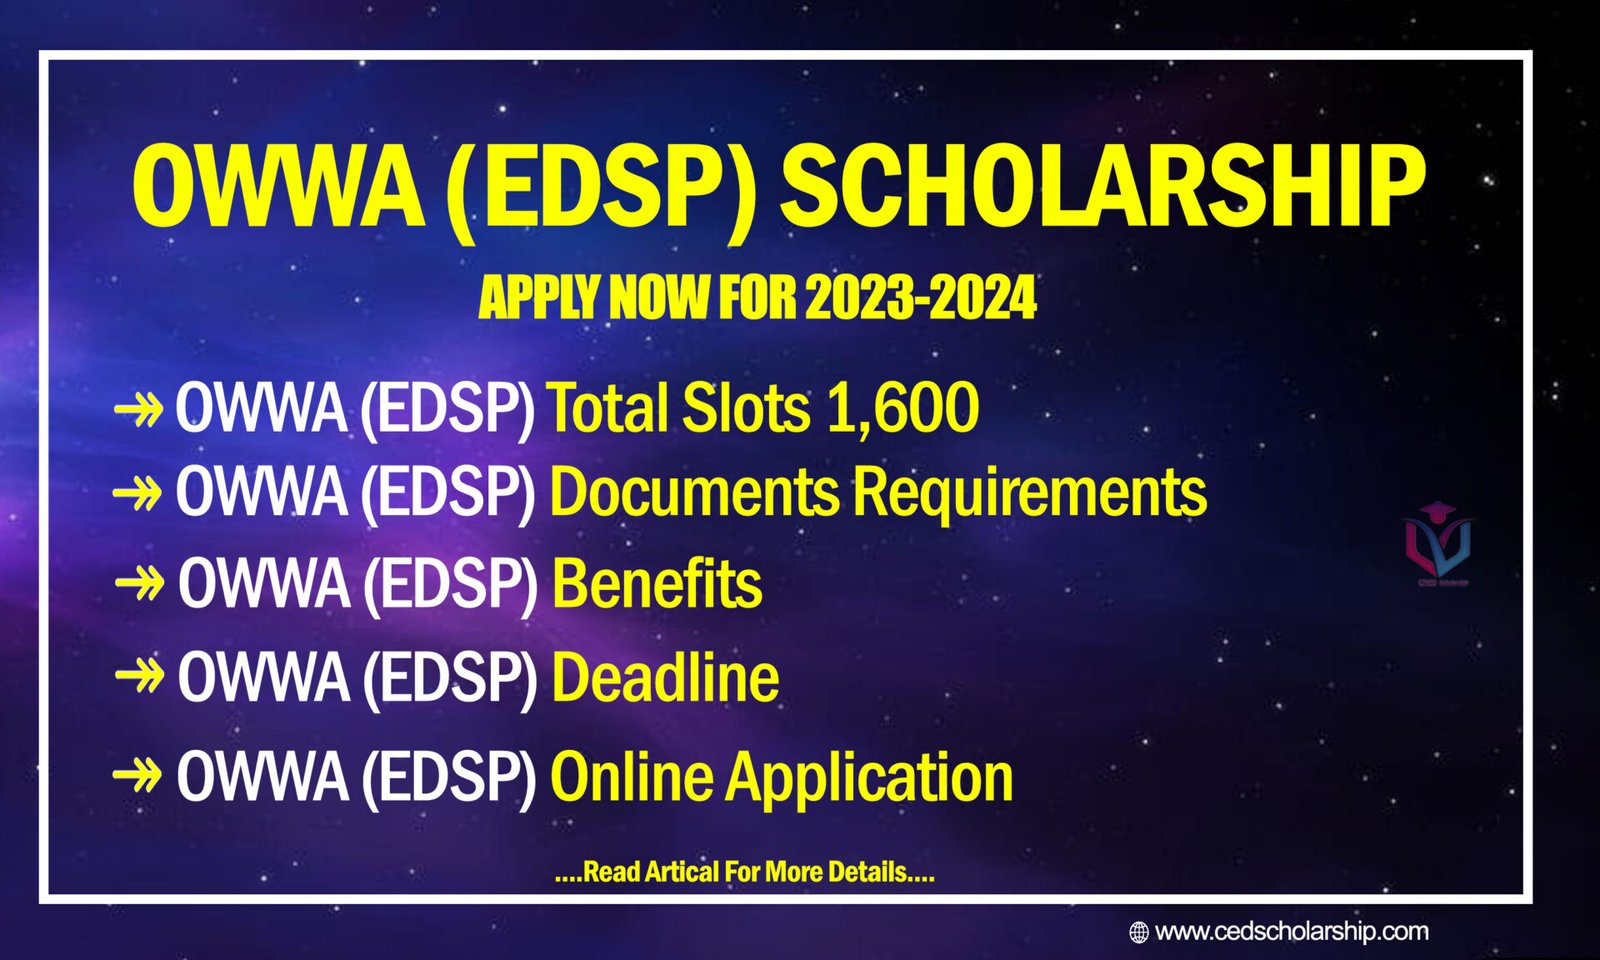 OWWA (EDSP) SCHOLARSHIP 2023-2024 OPEN NOW TO APPLY;